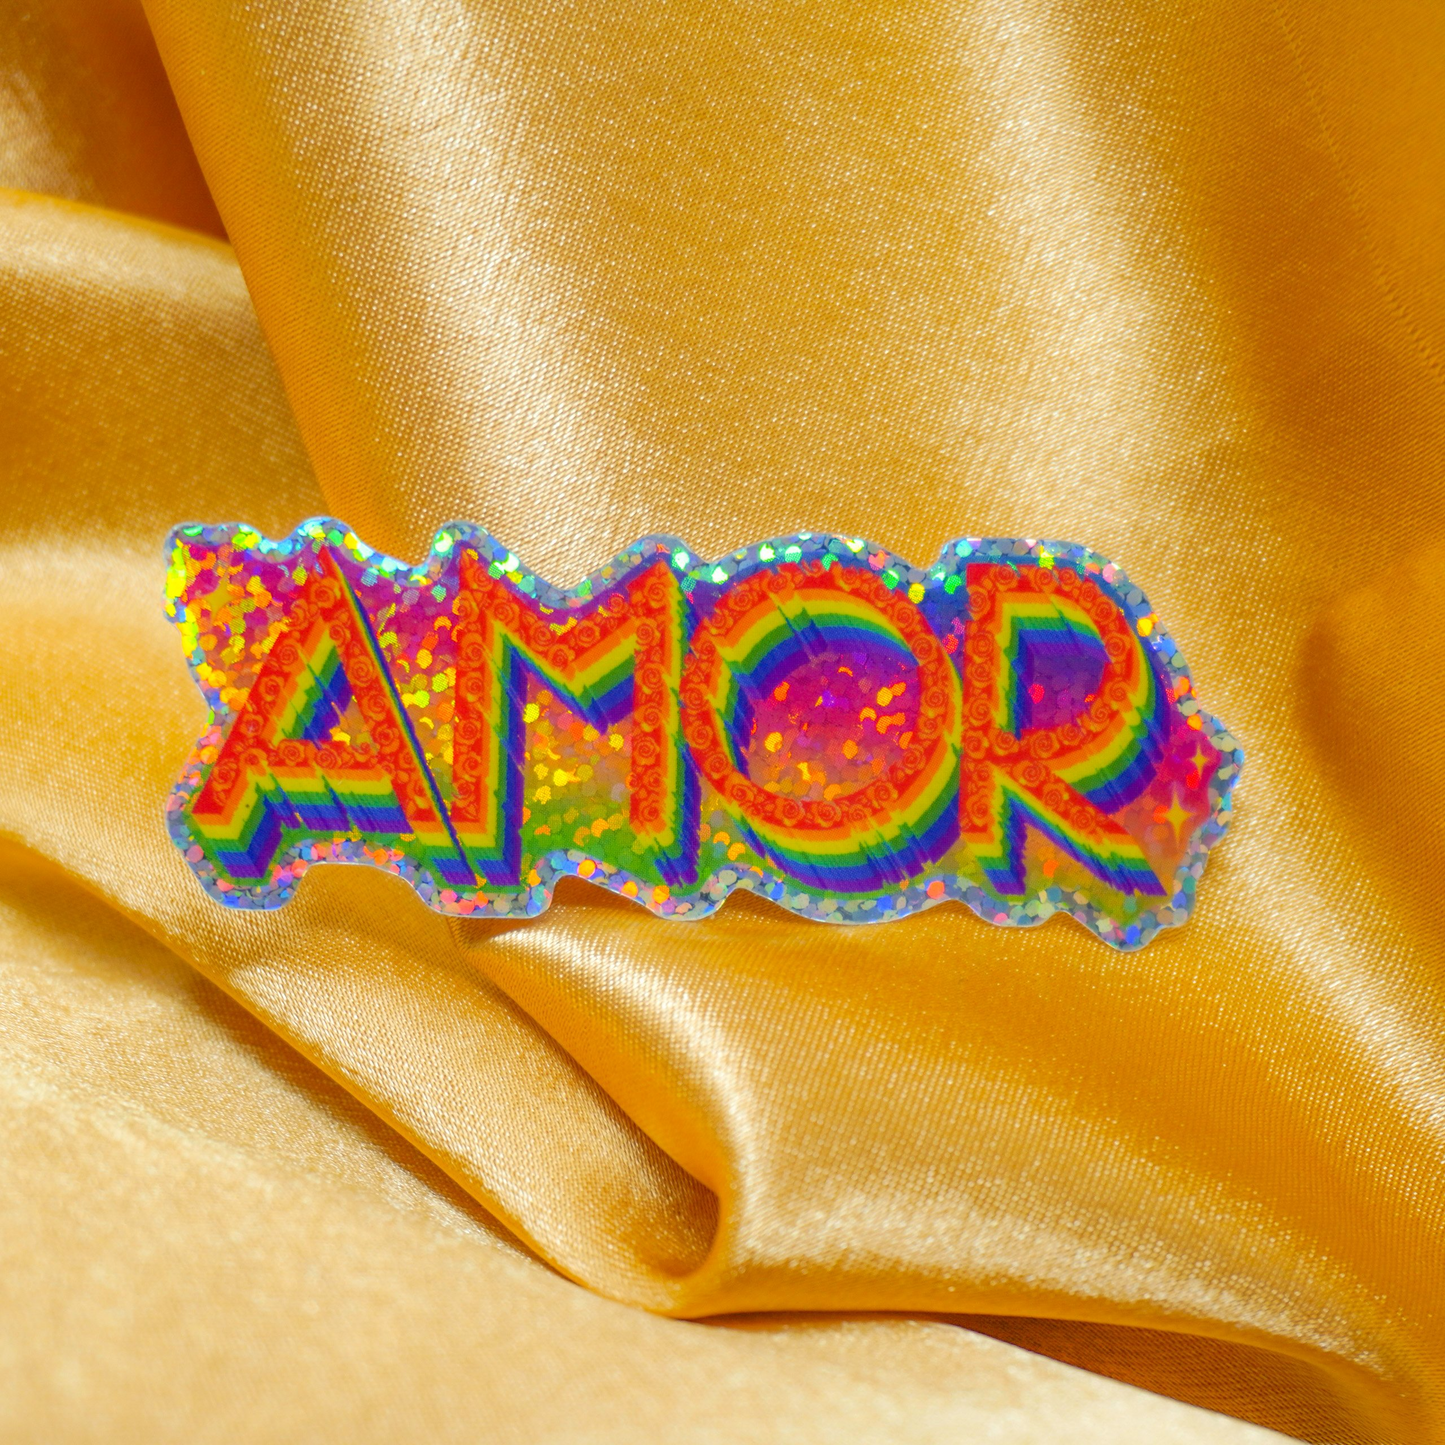 Amor (Pride) Sticker